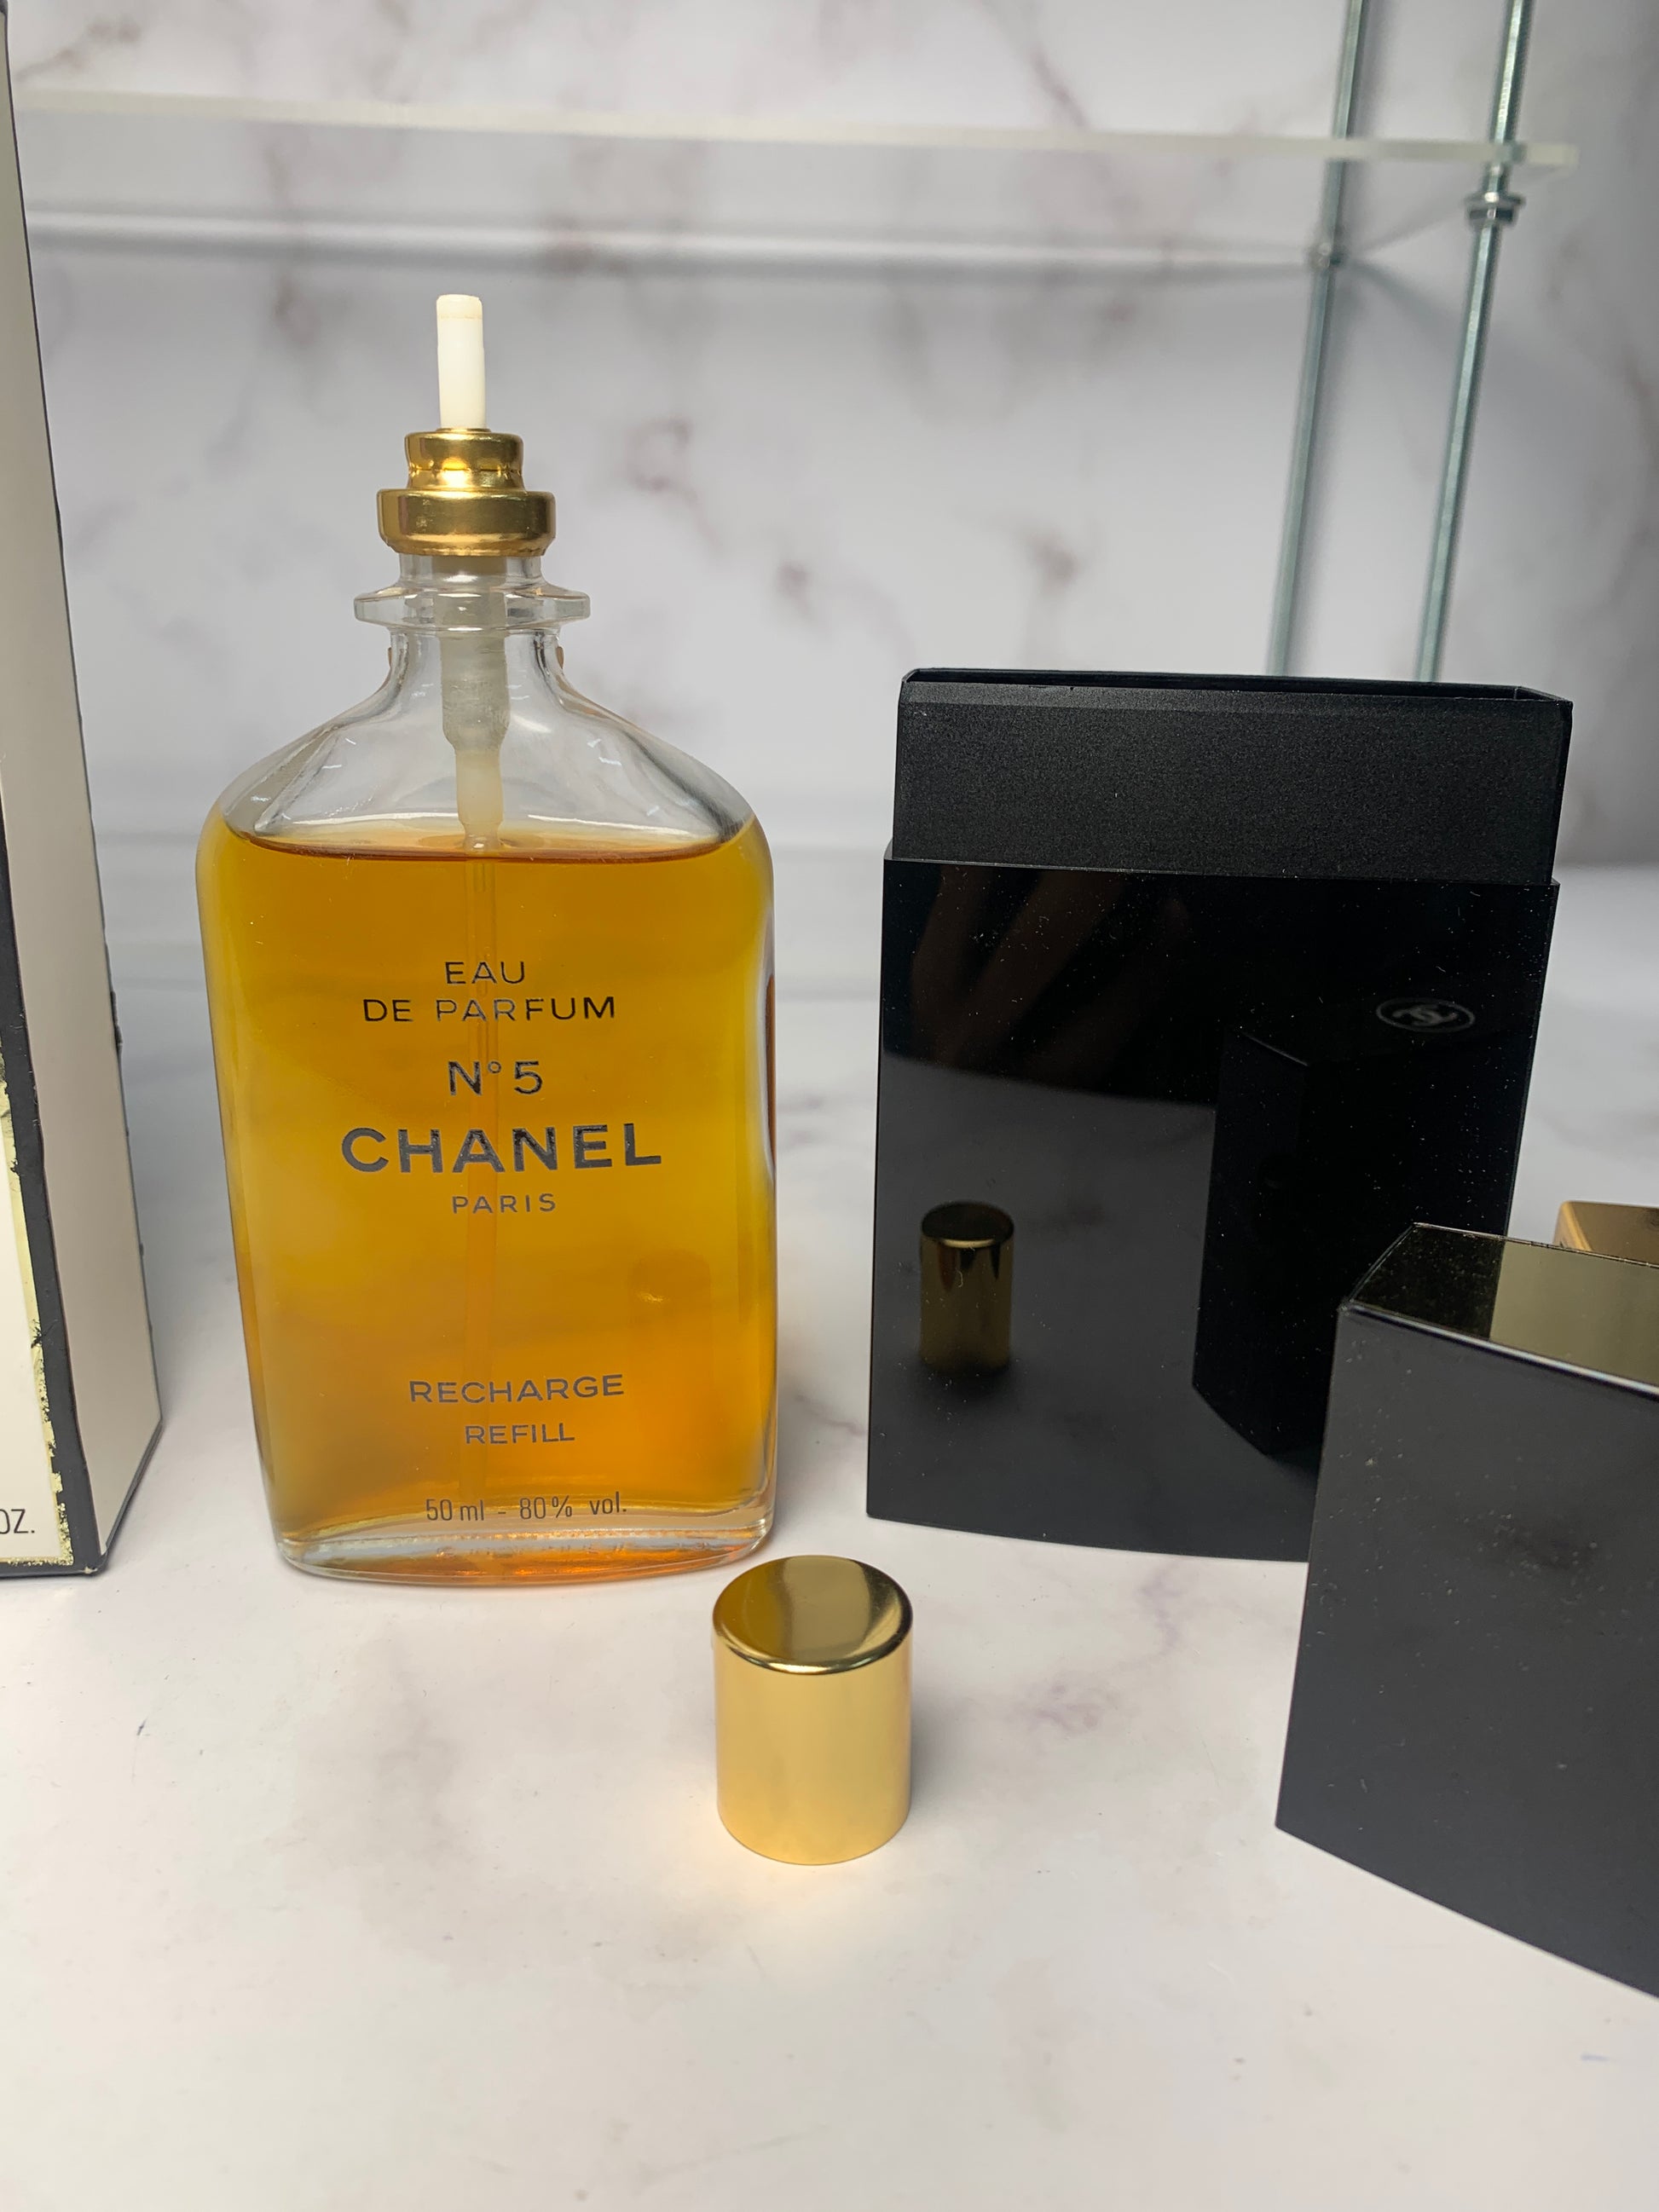 Chanel Coco Mademoiselle Eau De Toilette Recharge Spray Refill 1.7